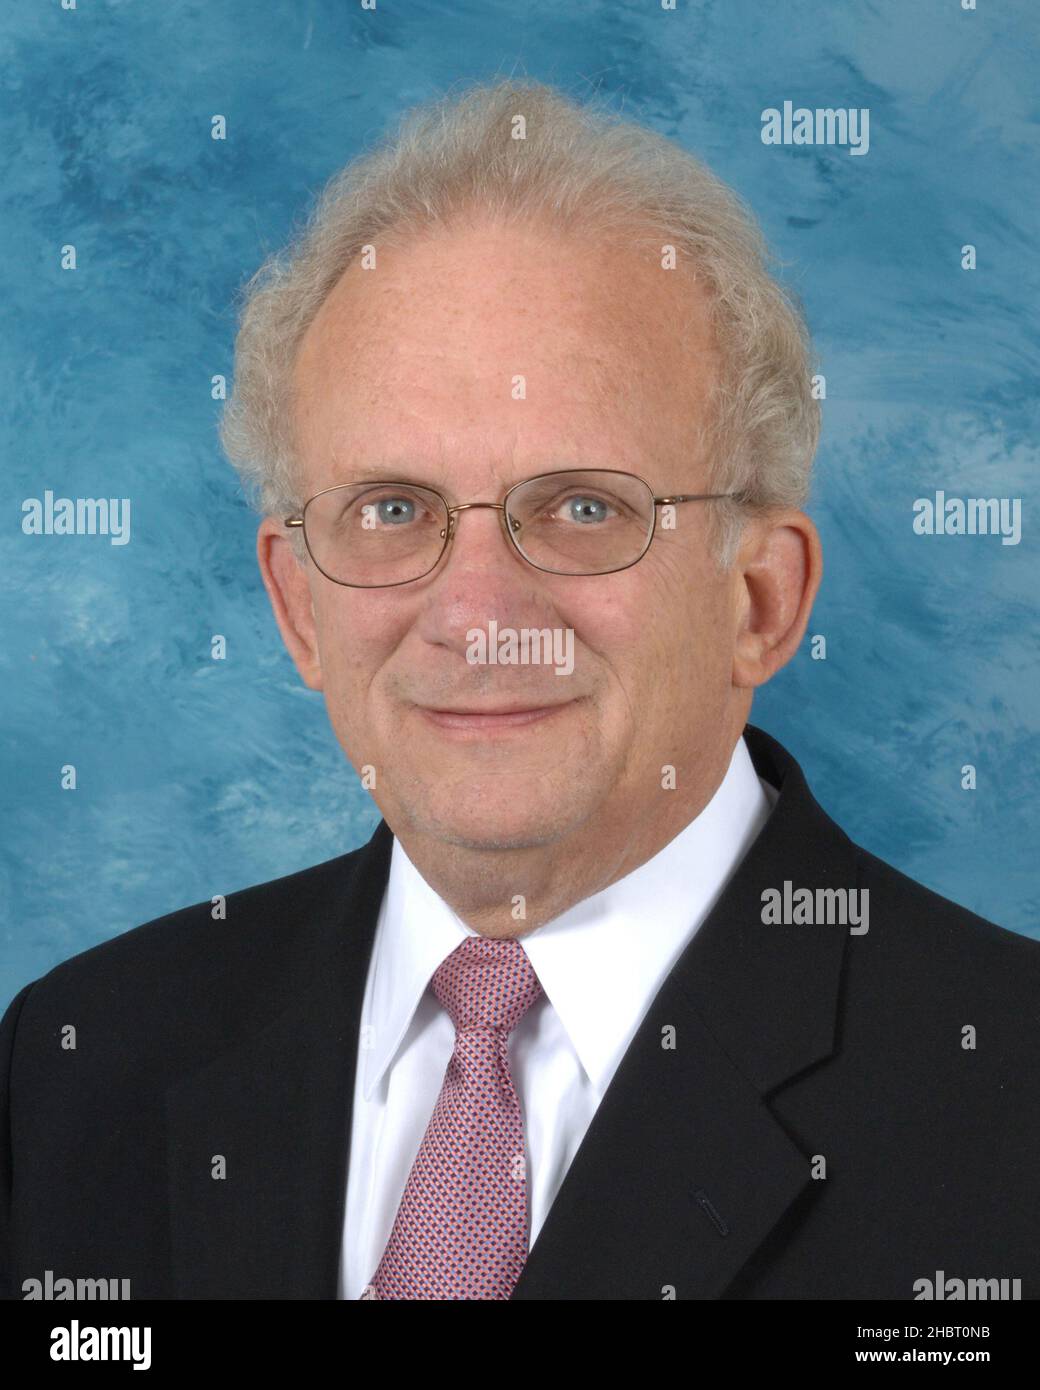 Howard Berman, membre de la Chambre des représentants des États-Unis Banque D'Images